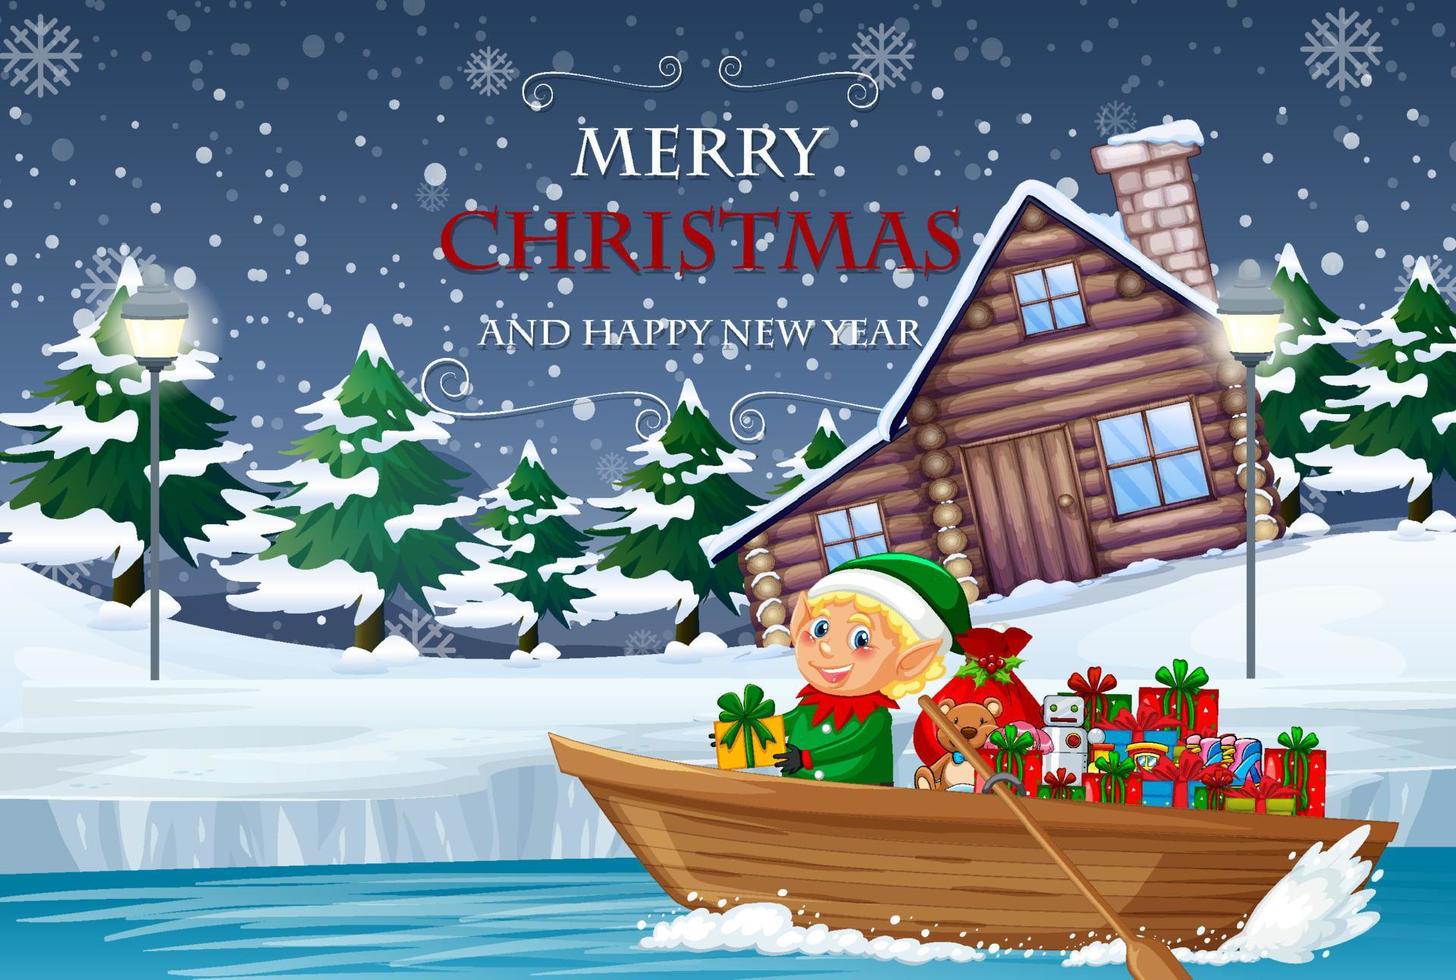 cartaz de feliz natal com elfo entregando presentes de barco a remo vetor